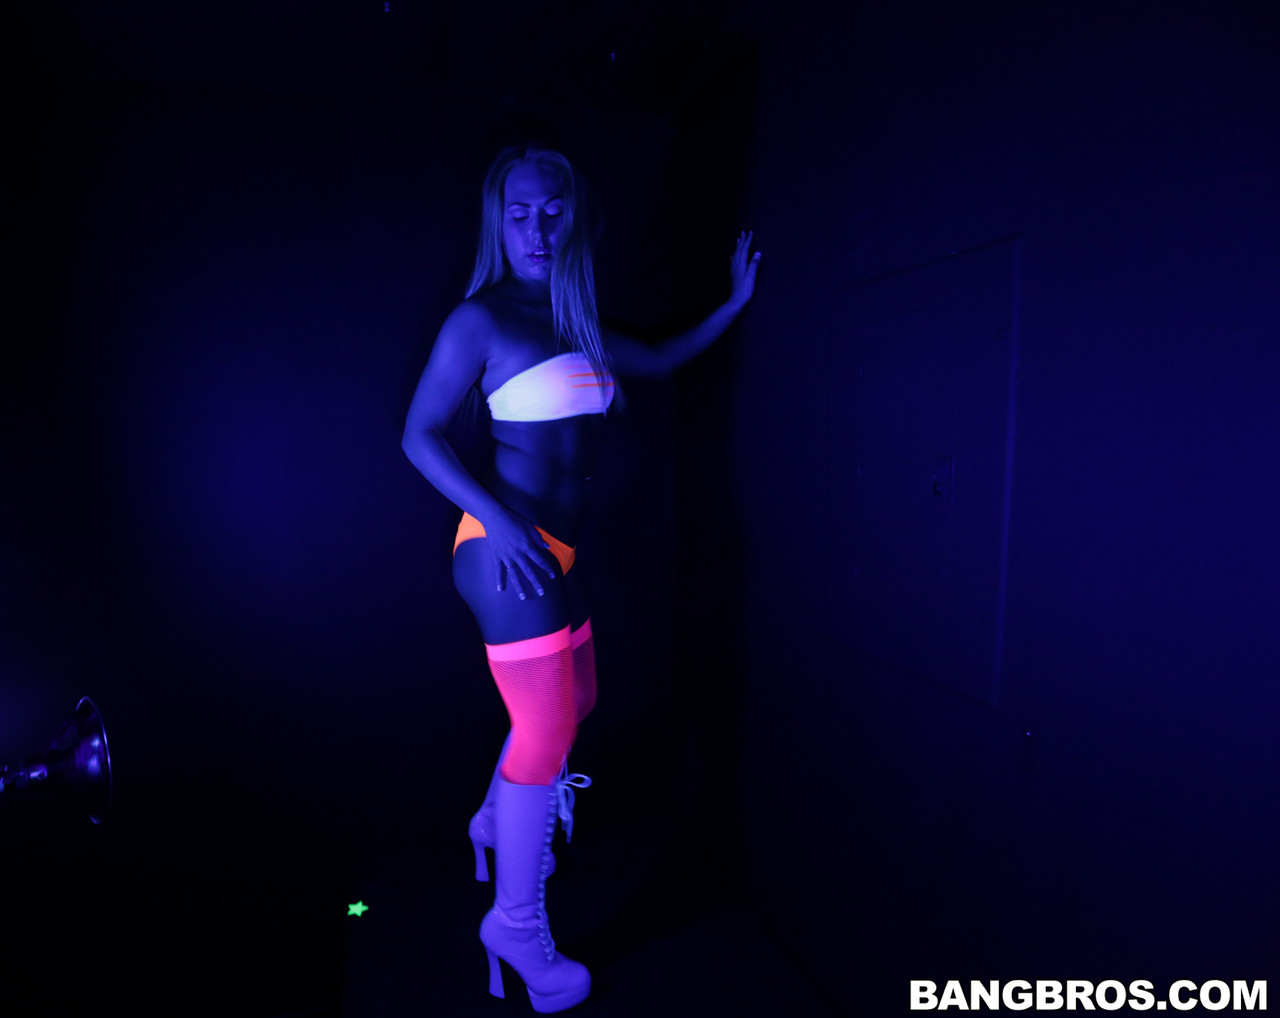 18 year old stripper Carter Cruise dancing in slutwear under blacklight 色情照片 #424557096 | Bangbros Network Pics, Carter Cruise, Tony Rubino, Shorts, 手机色情